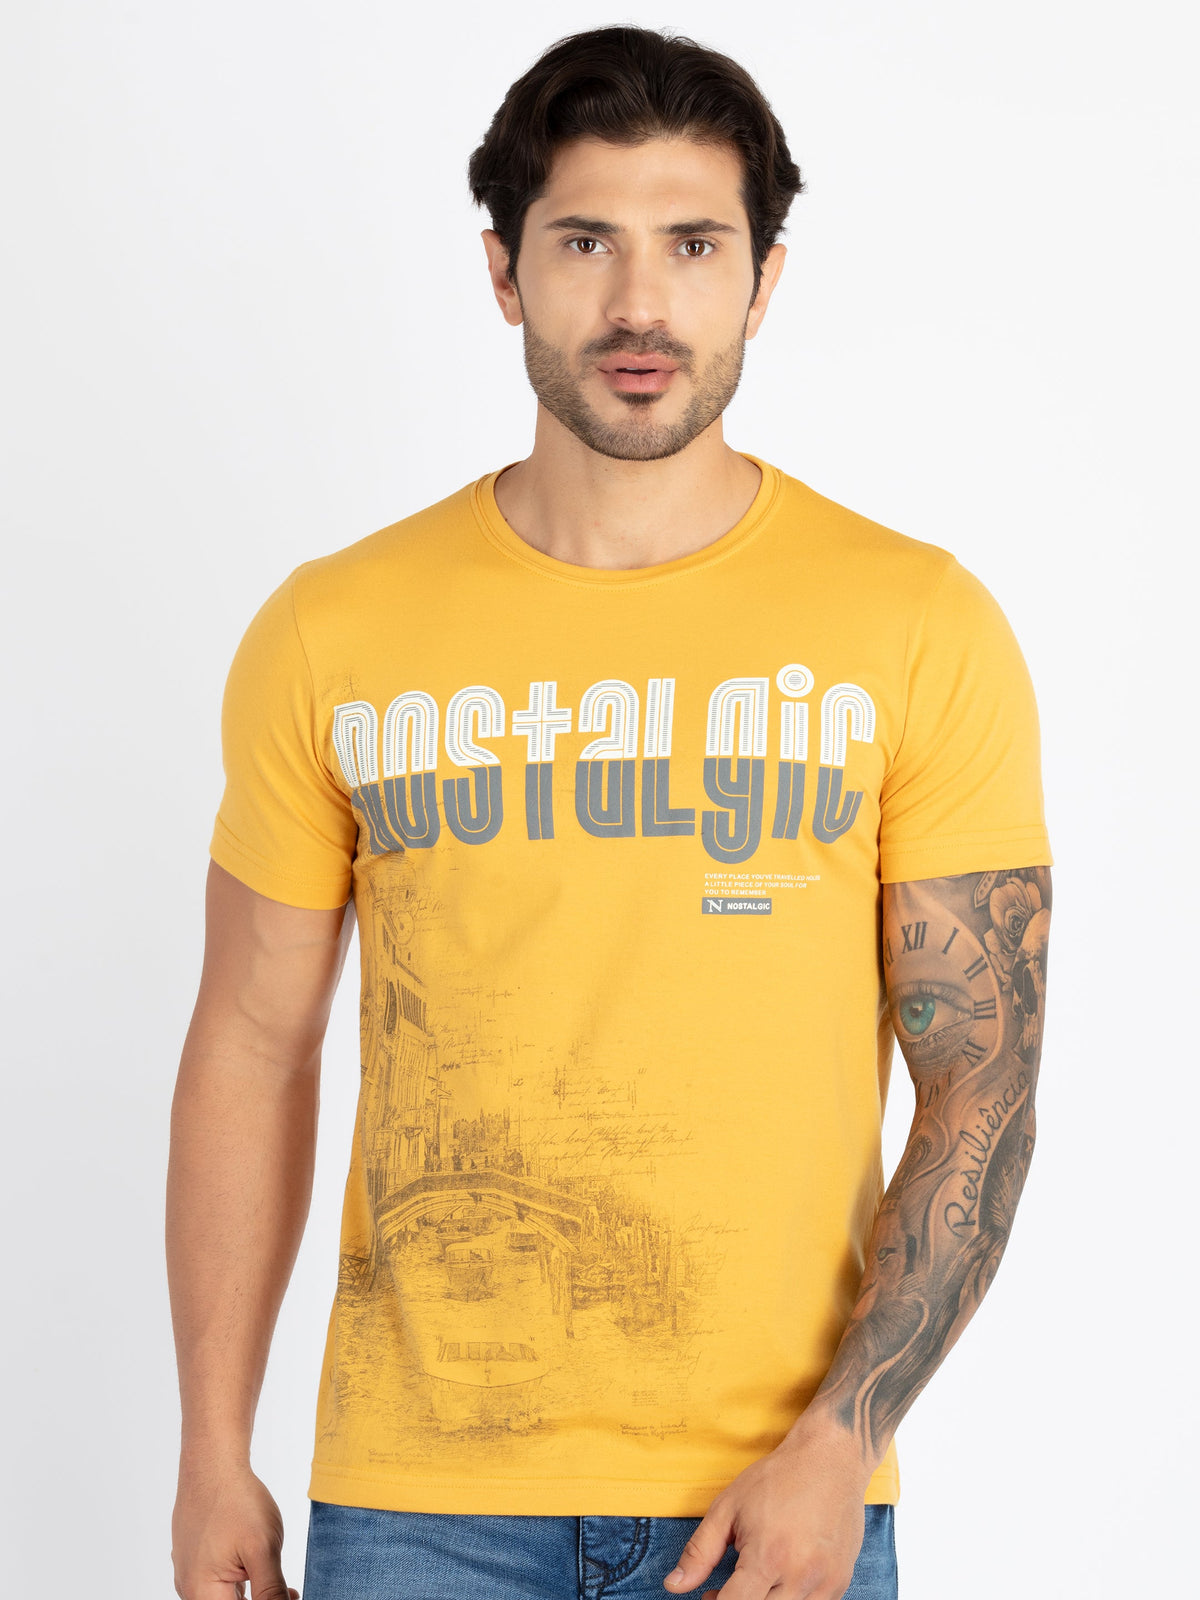 Status Quo |Men's Printed T-shirt - 3XL, 4XL, 5XL